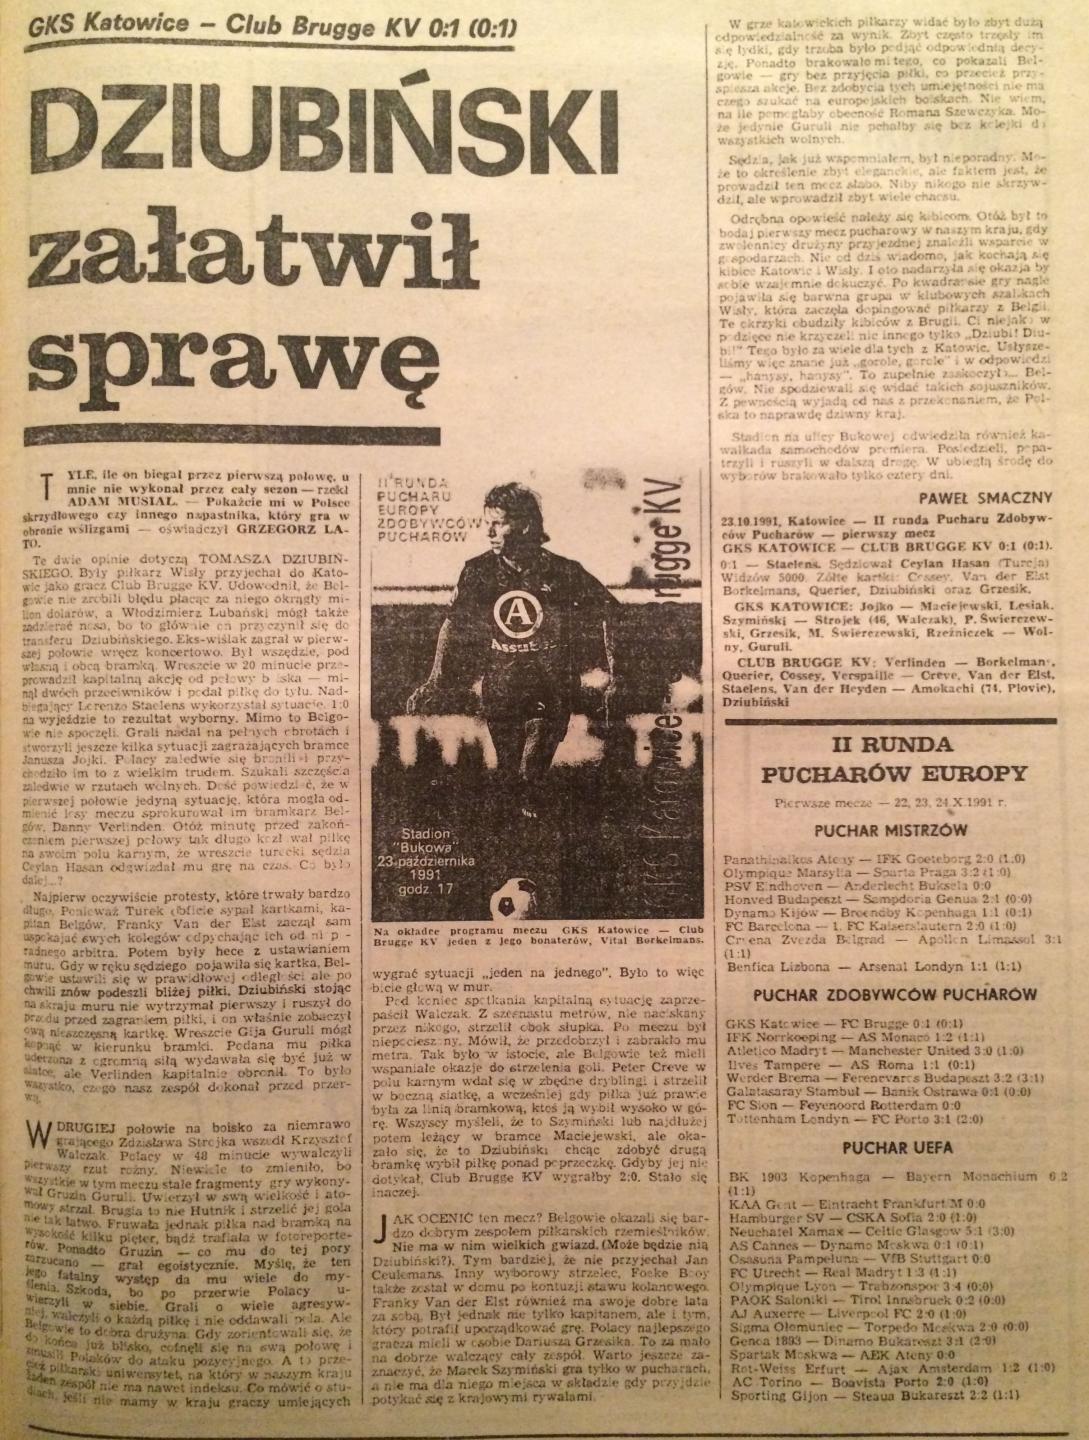 Piłka Nożna po GKS Katowice - Club Brugge 0:1 (23.10.1991) 2